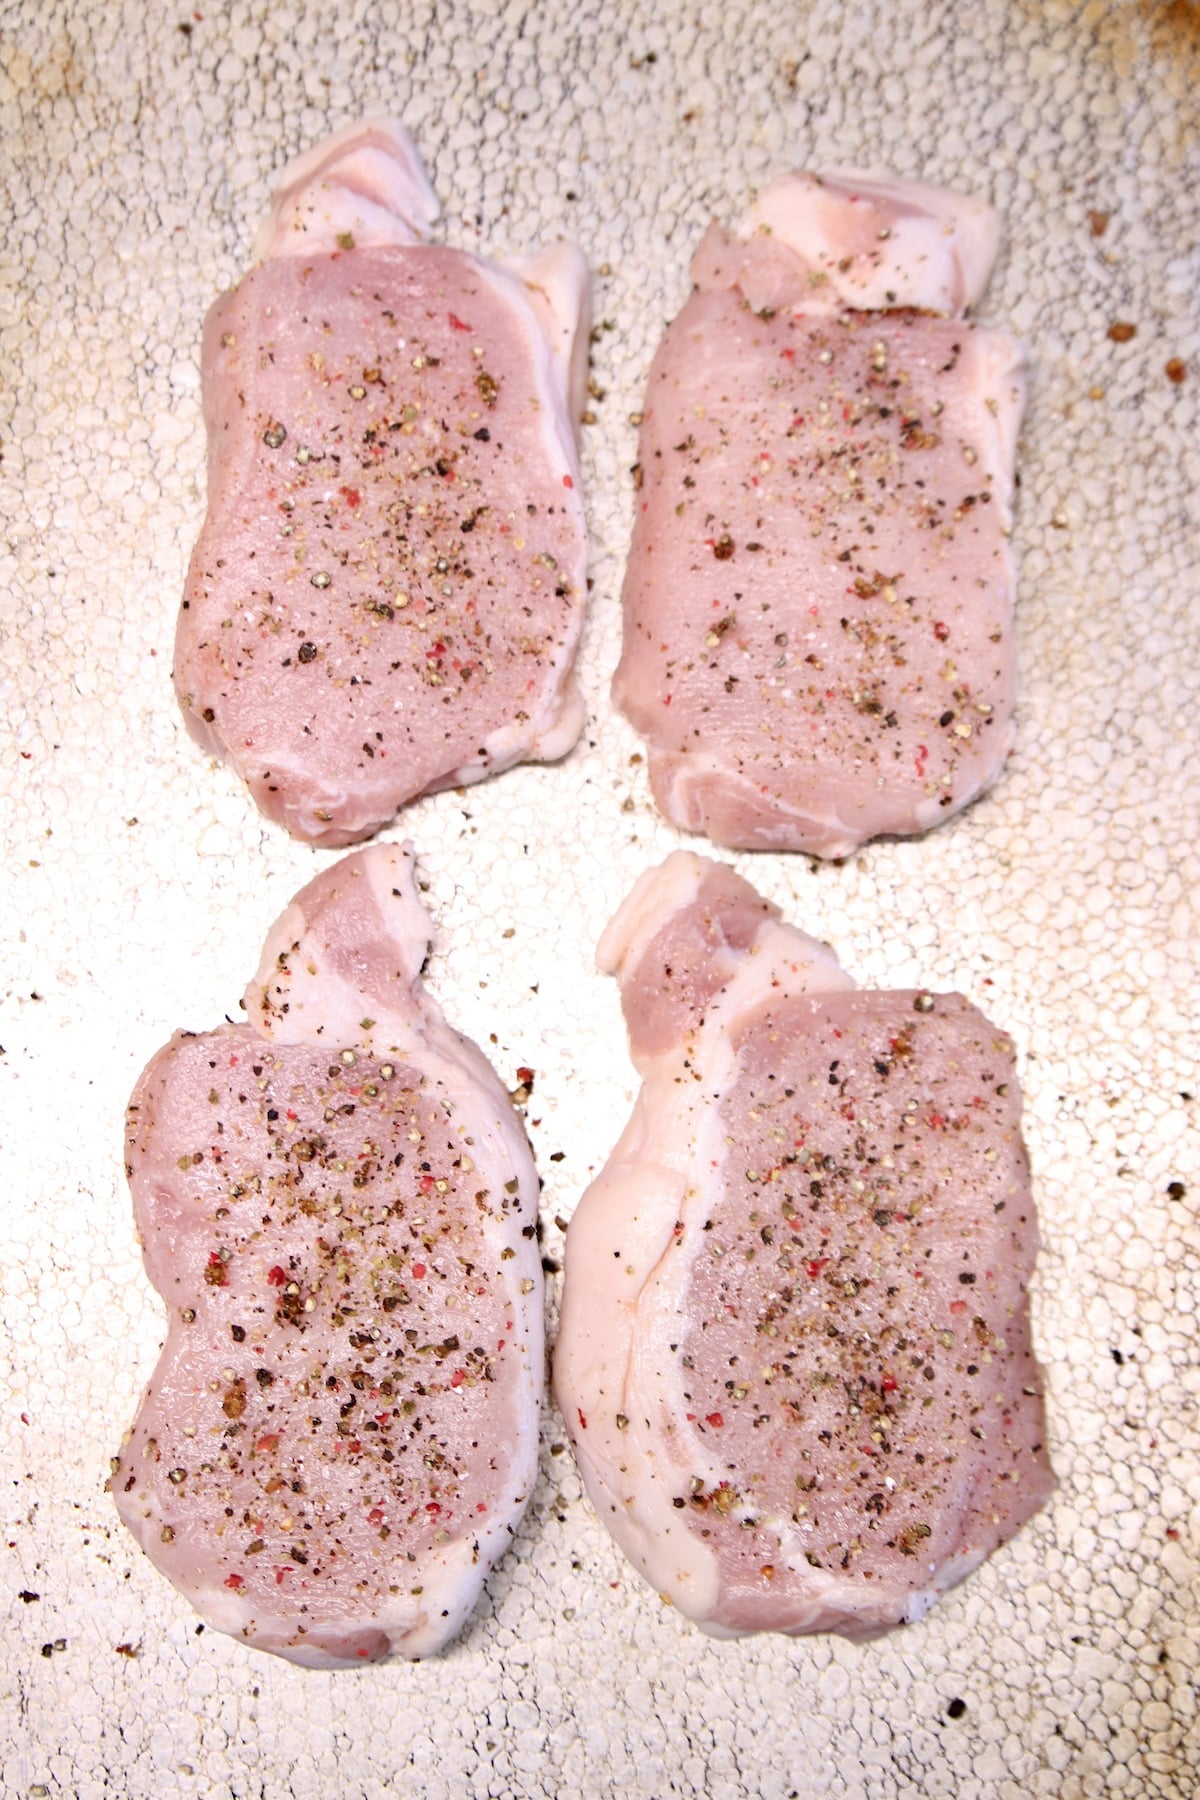 4 boneless pork chops with salt and pepper.